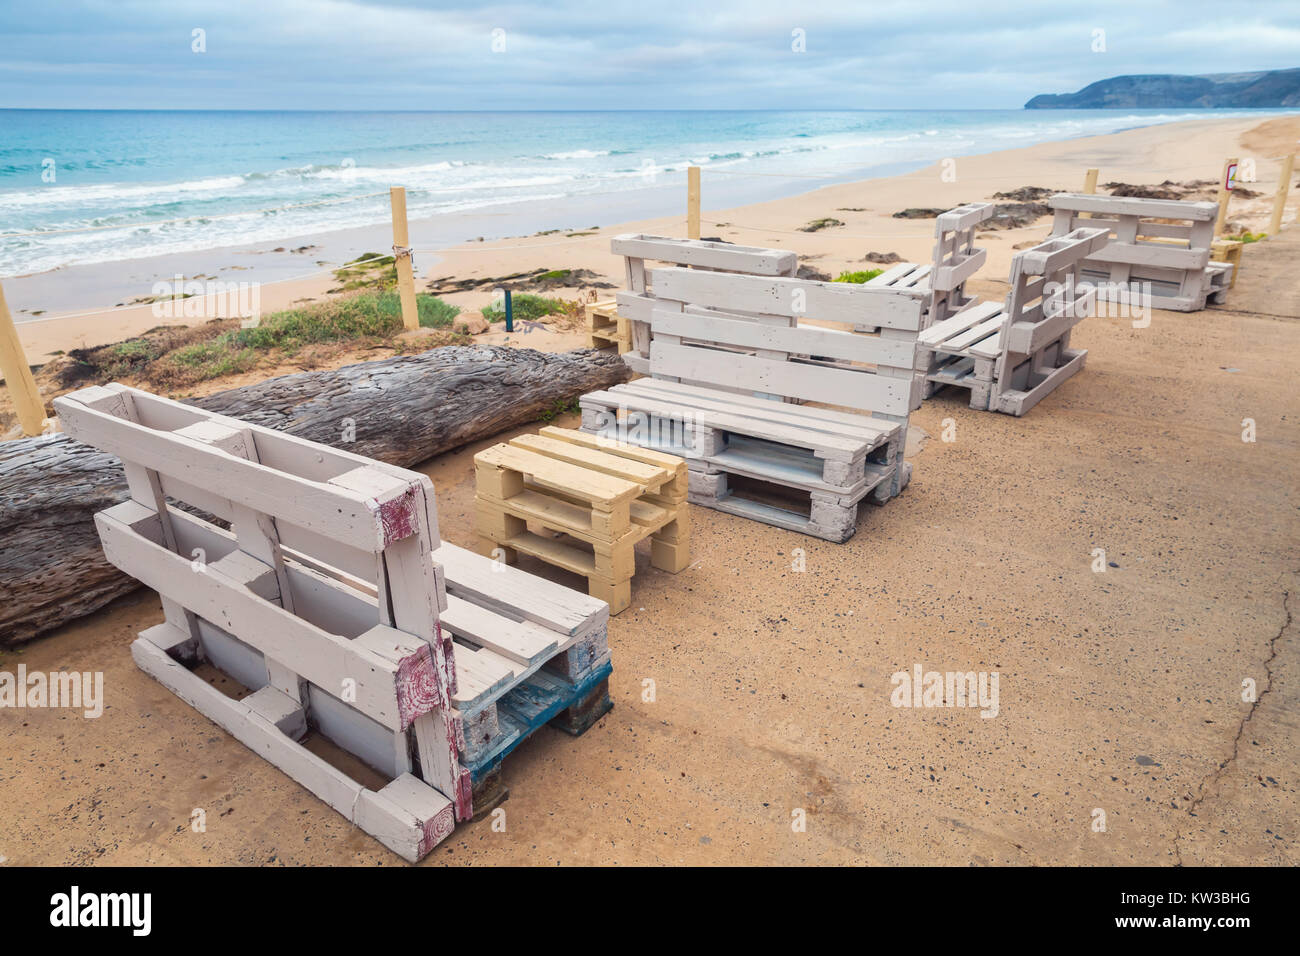 Standard white furniture made of wooden cargo pallets, cheap seaside terrace. Porto Santo island, Madeira archipelago, Portugal Stock Photo